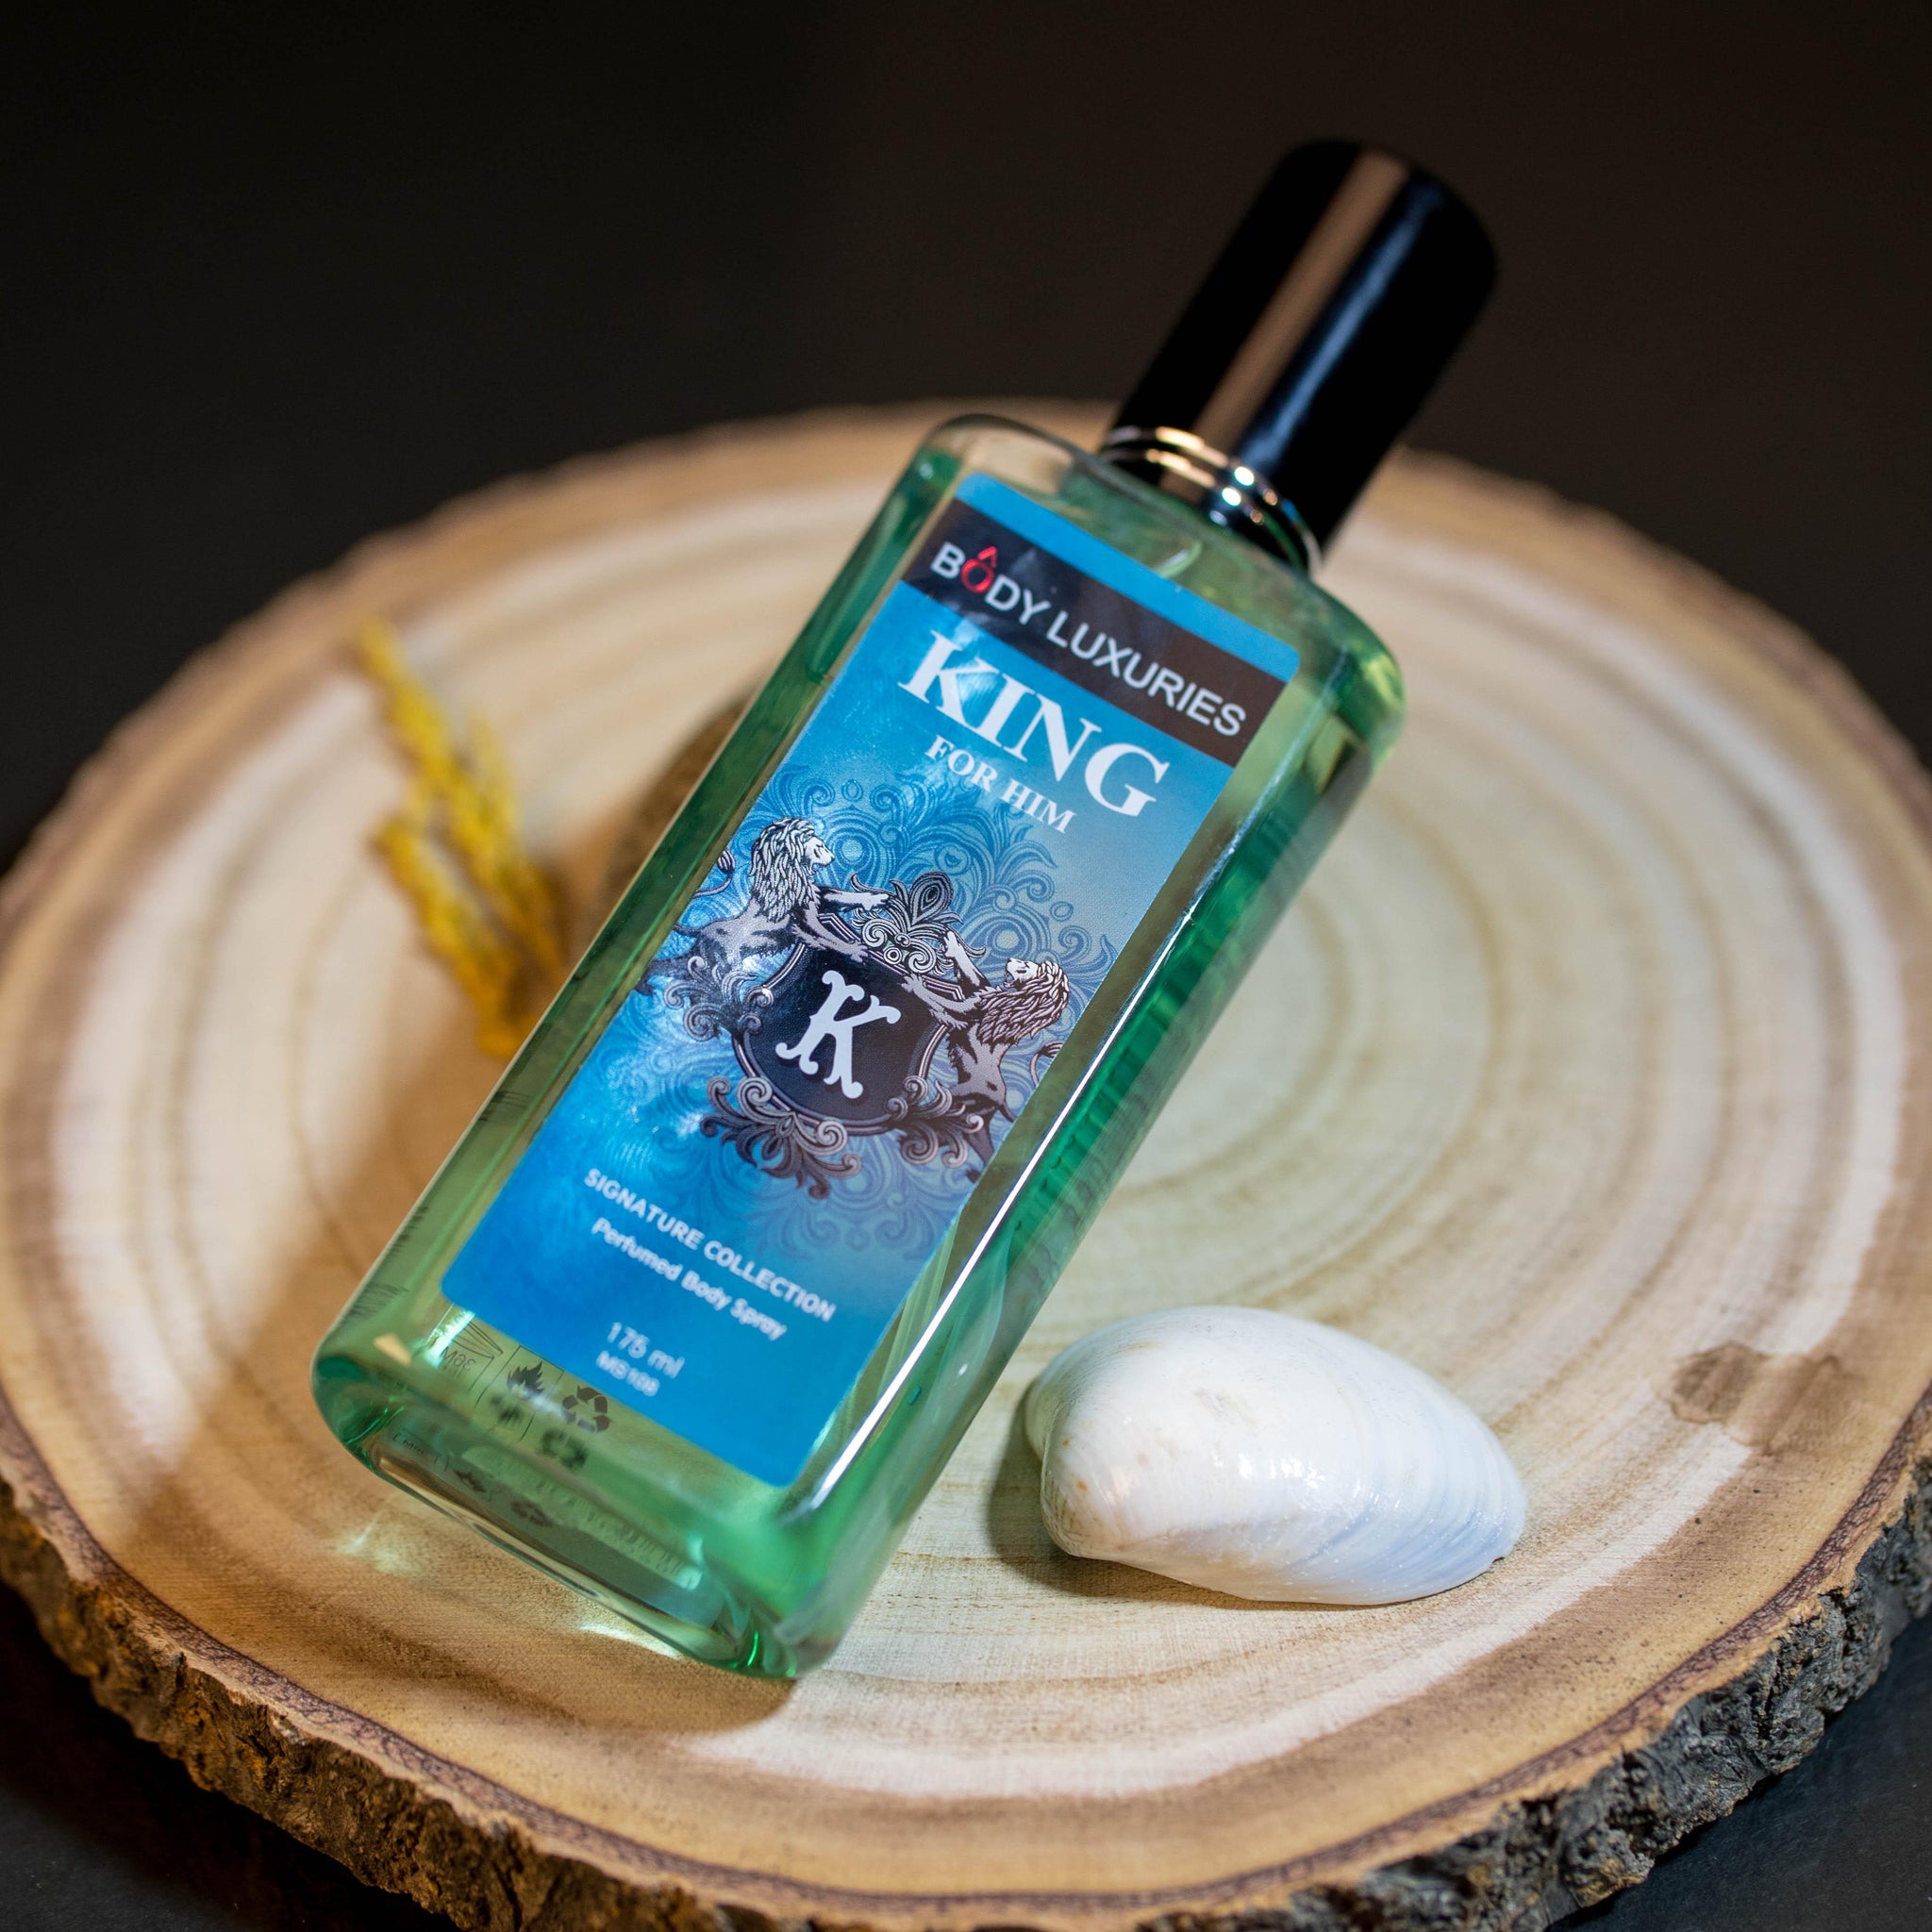 Body Luxuries Men Perfumed Body Spray – King 200ml - binbakar official